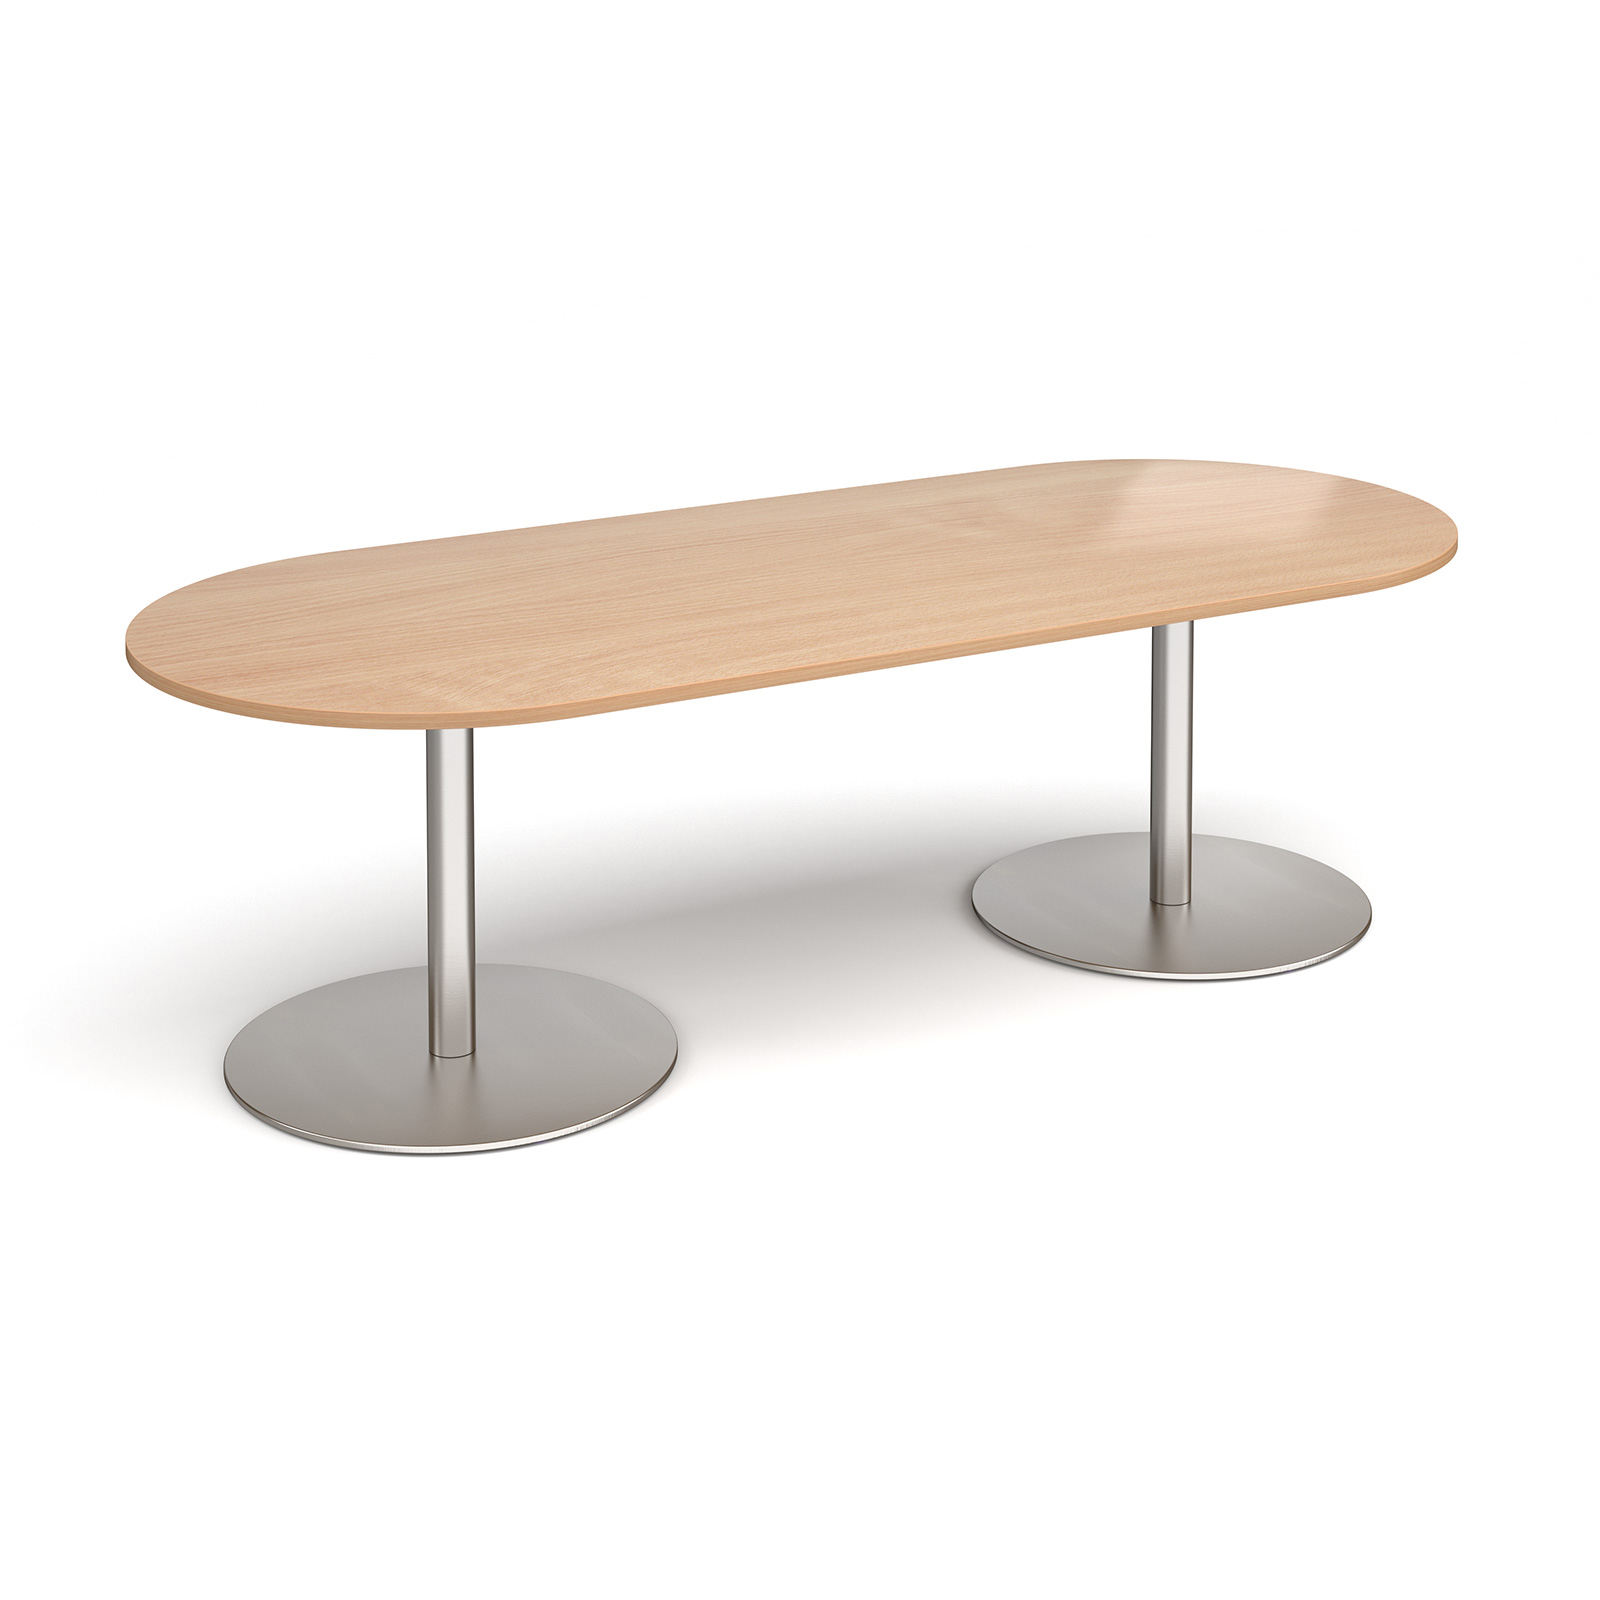 Eternal radial end boardroom table 2400mm x 1000mm - brushed steel base, beech top